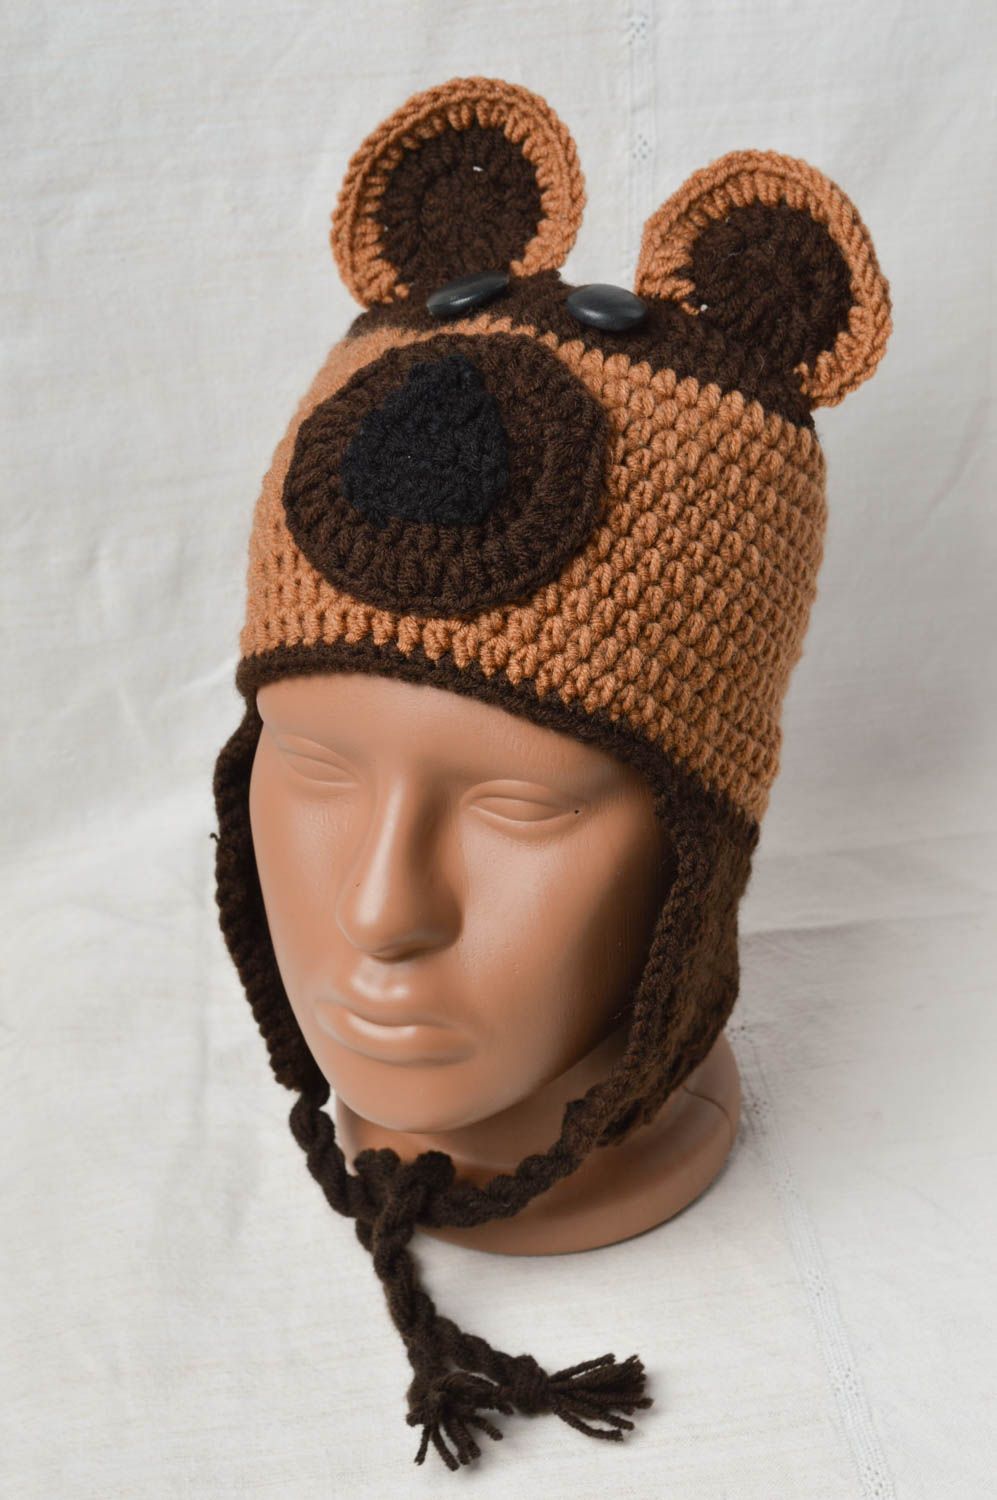 Handmade crochet hat warm baby hat designs fashion accessories for kids photo 2